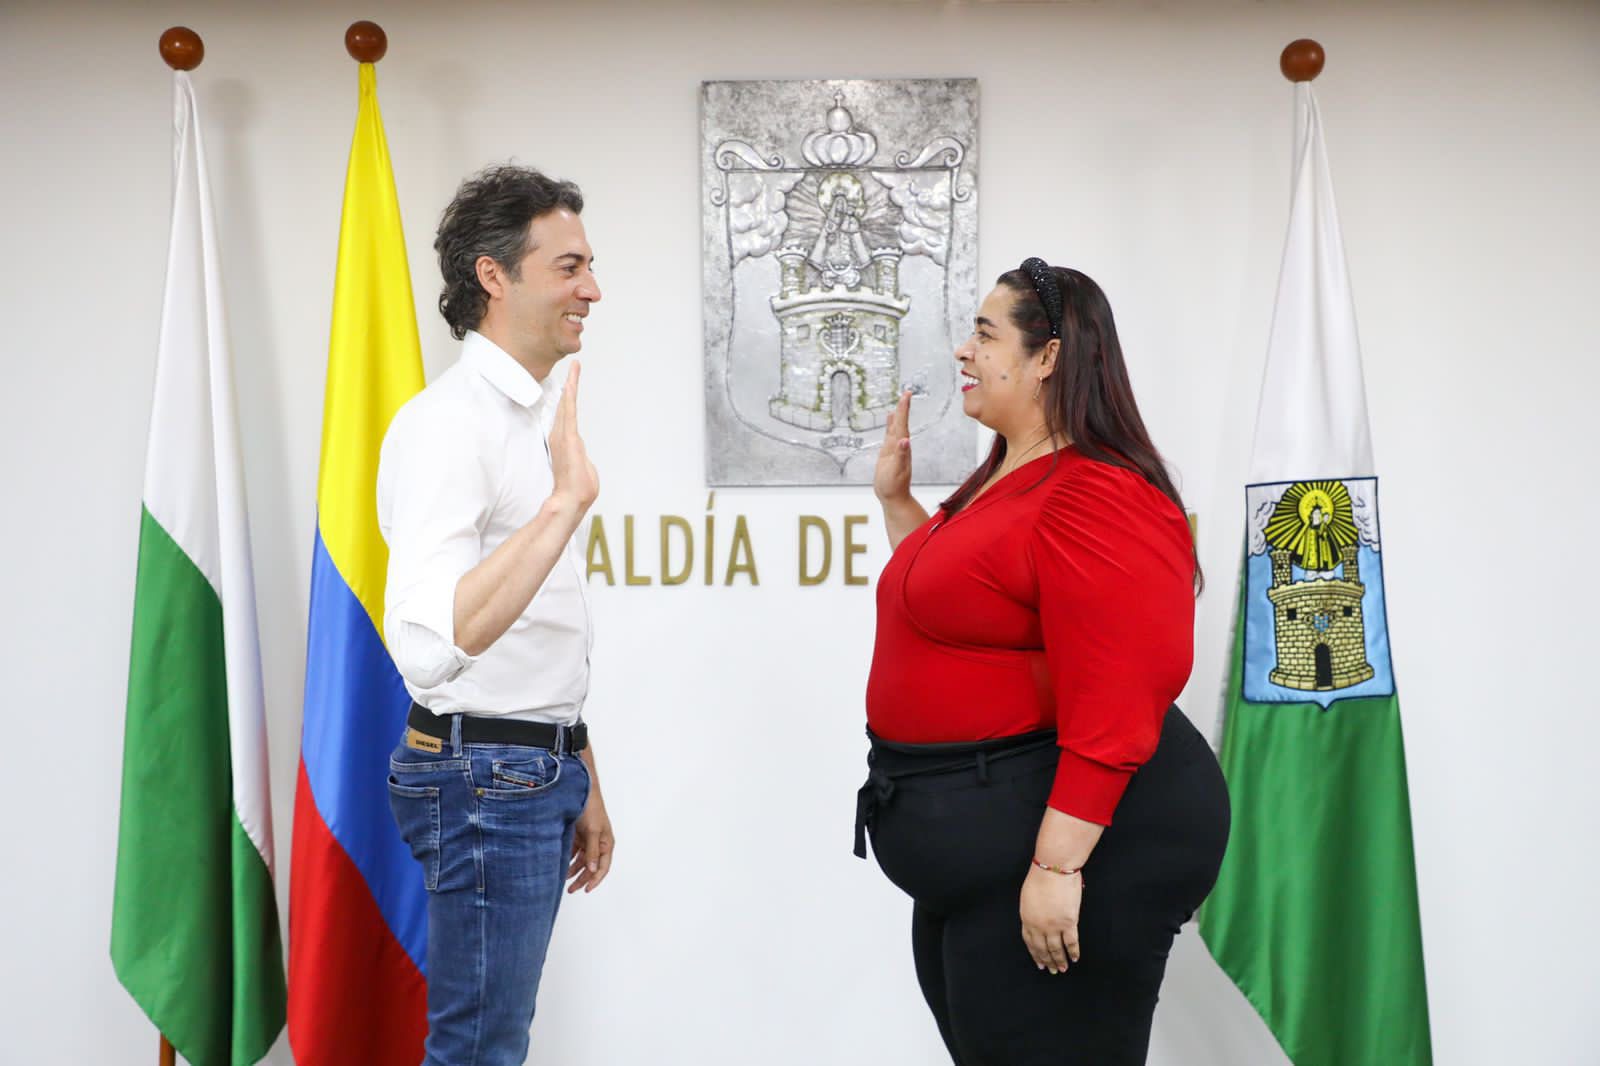 Daniel Quintero, Mayor of Medellín, Melina Lópera, the new Minister of Health